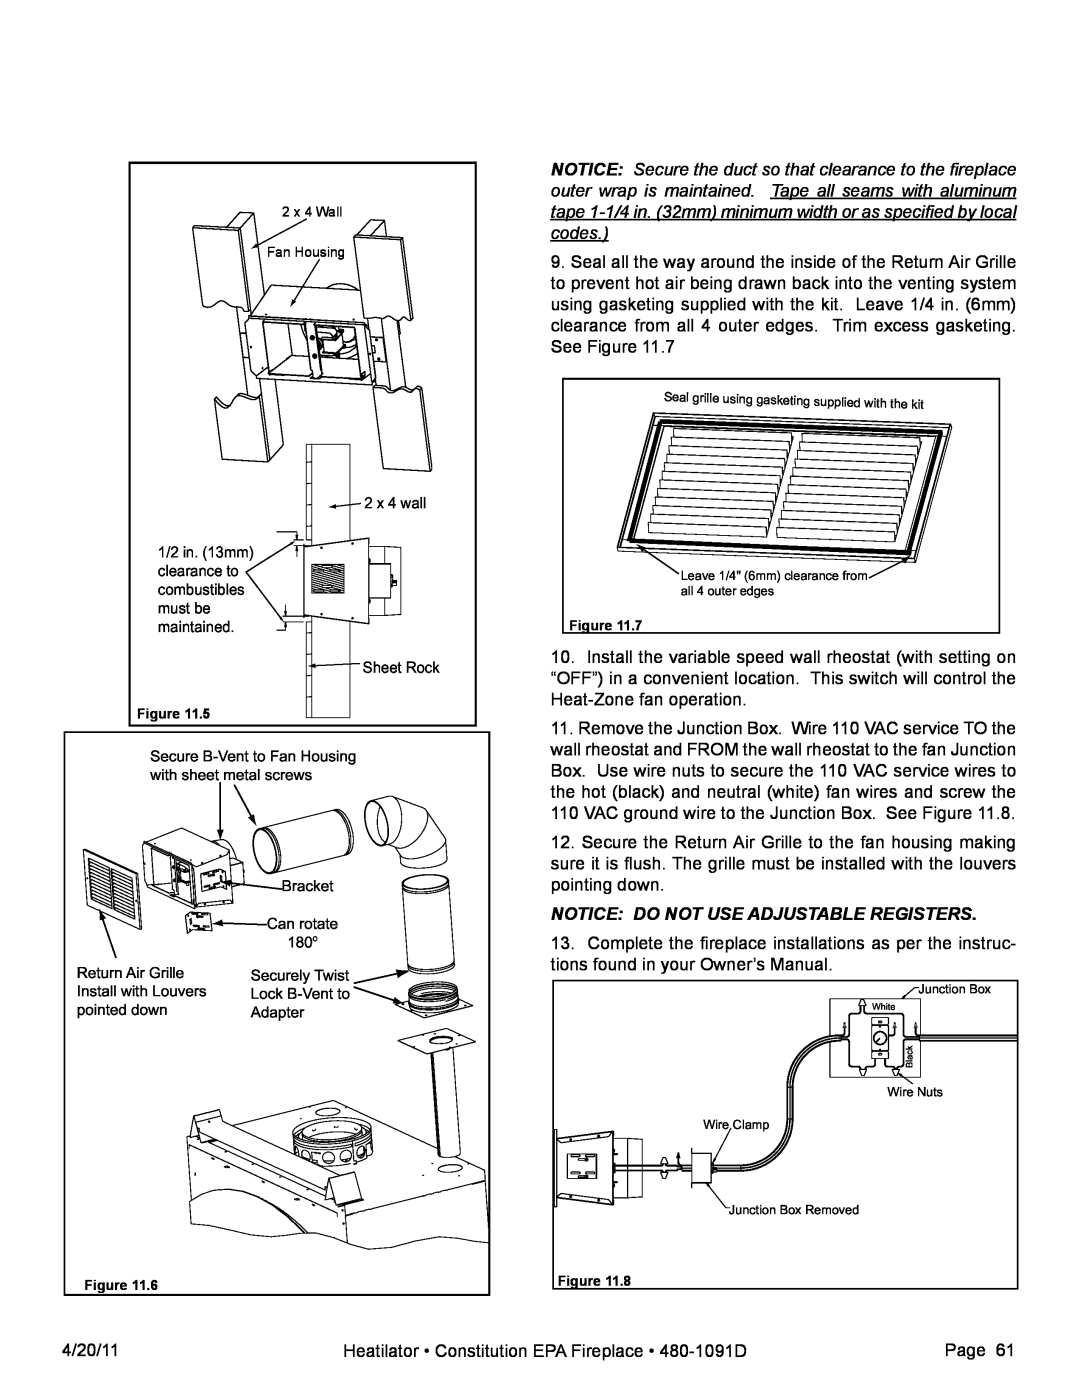 Heatiator C40 owner manual Notice: Do Not Use Adjustable Registers 